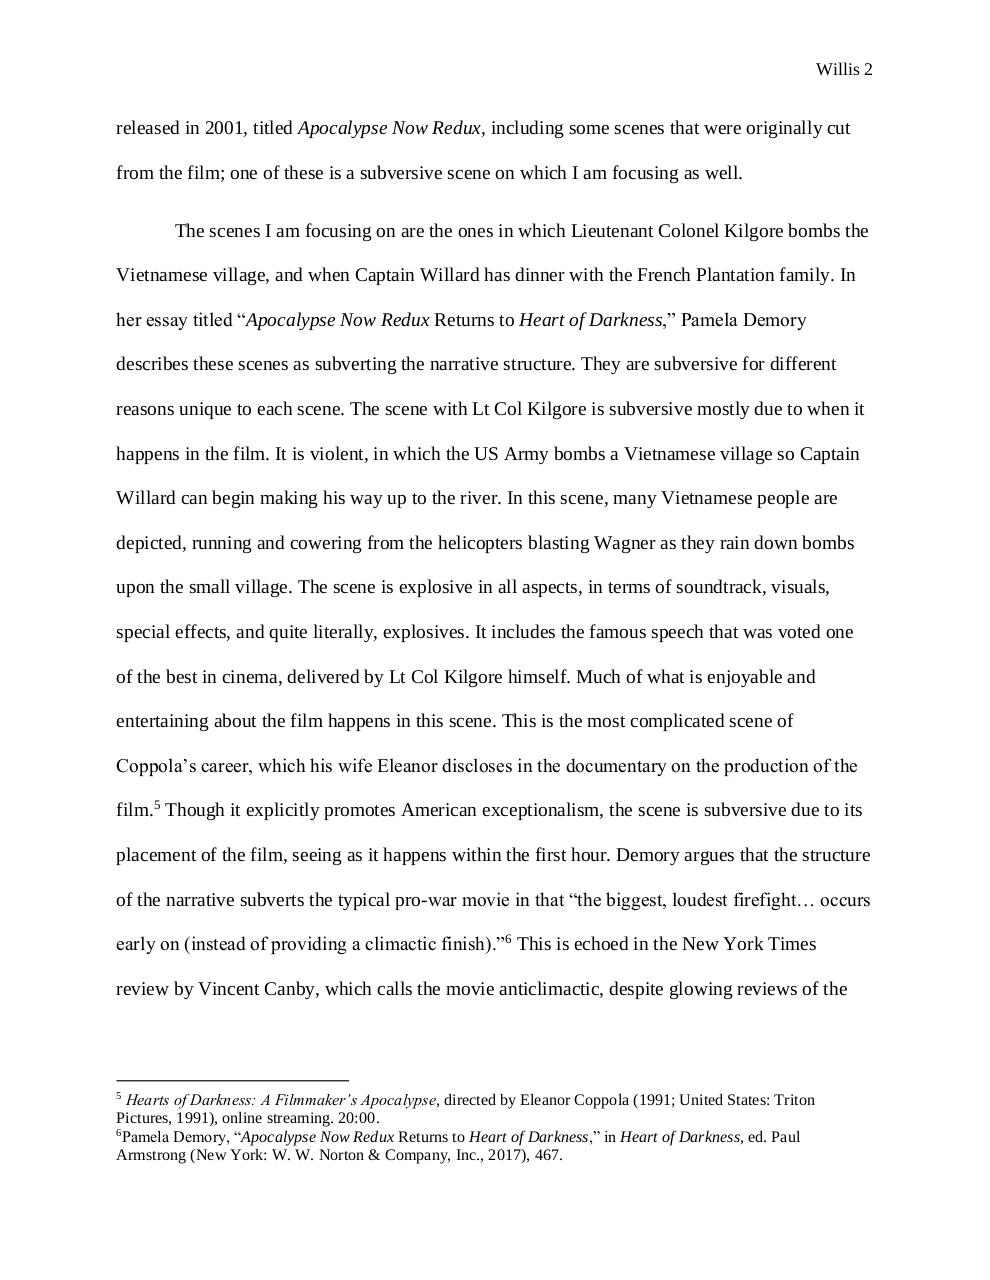 Foreign Language as Subversive in Apocalypse Now Redux.pdf - page 2/14